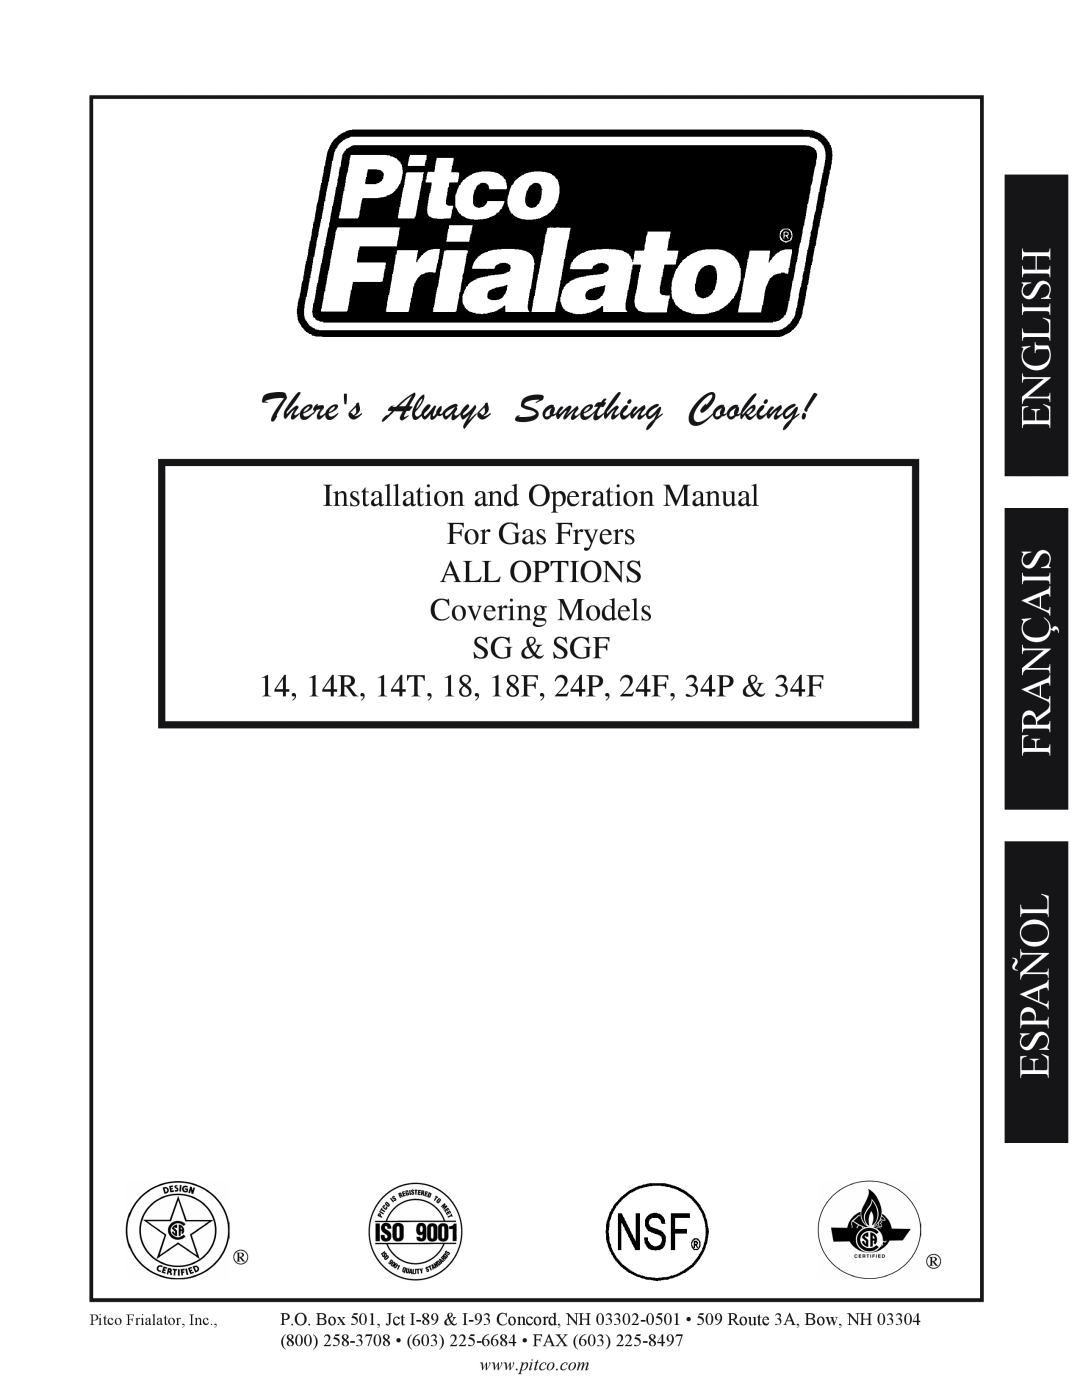 Pitco Frialator SG operation manual English Français Español, Theres Always Something Cooking 